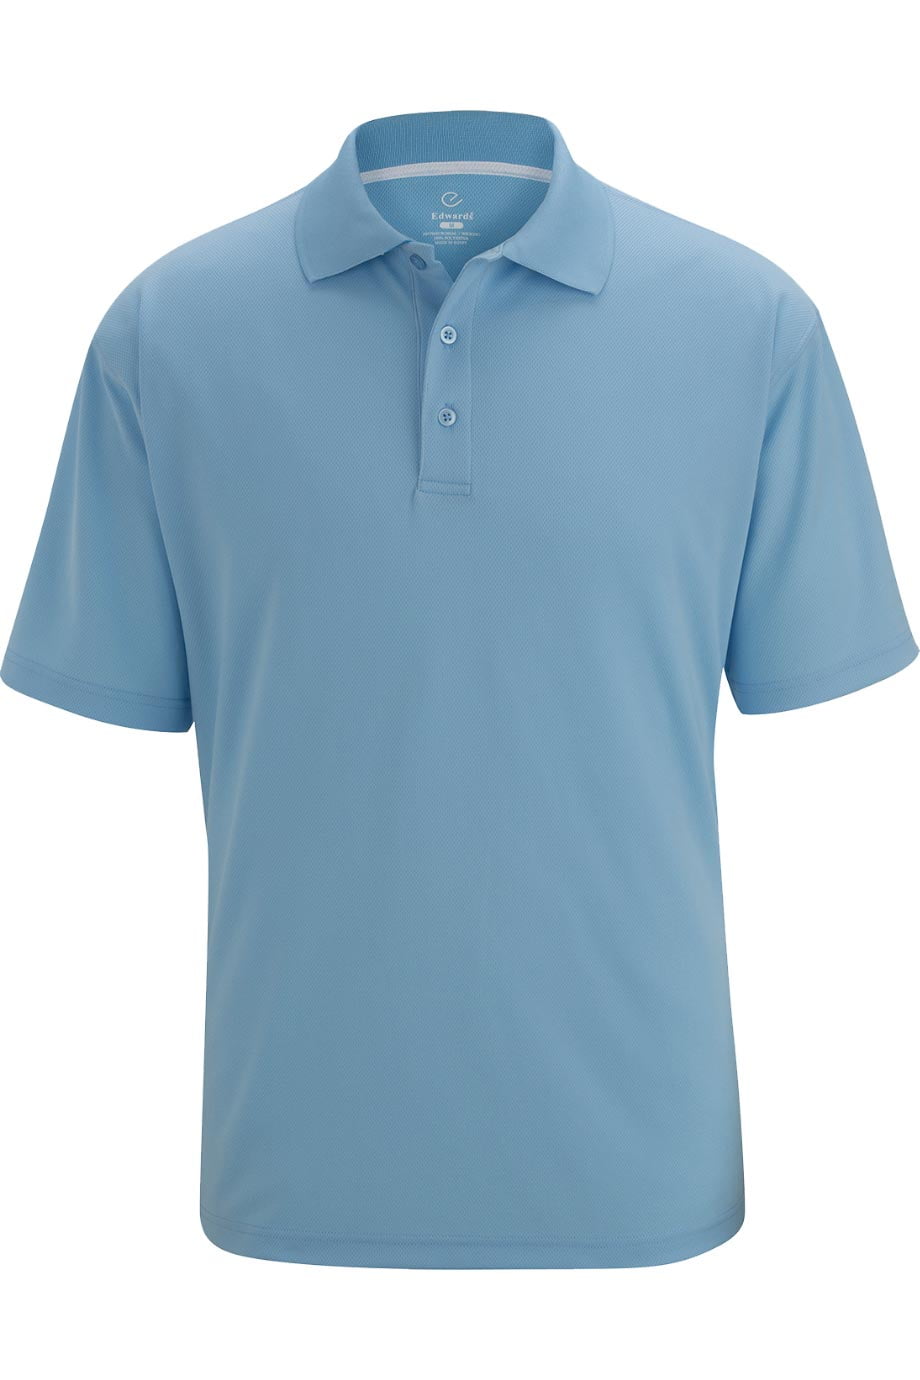 Shirt Polo Wicking Sport Garments Men\'s Moisture Sleeve Short Edwards